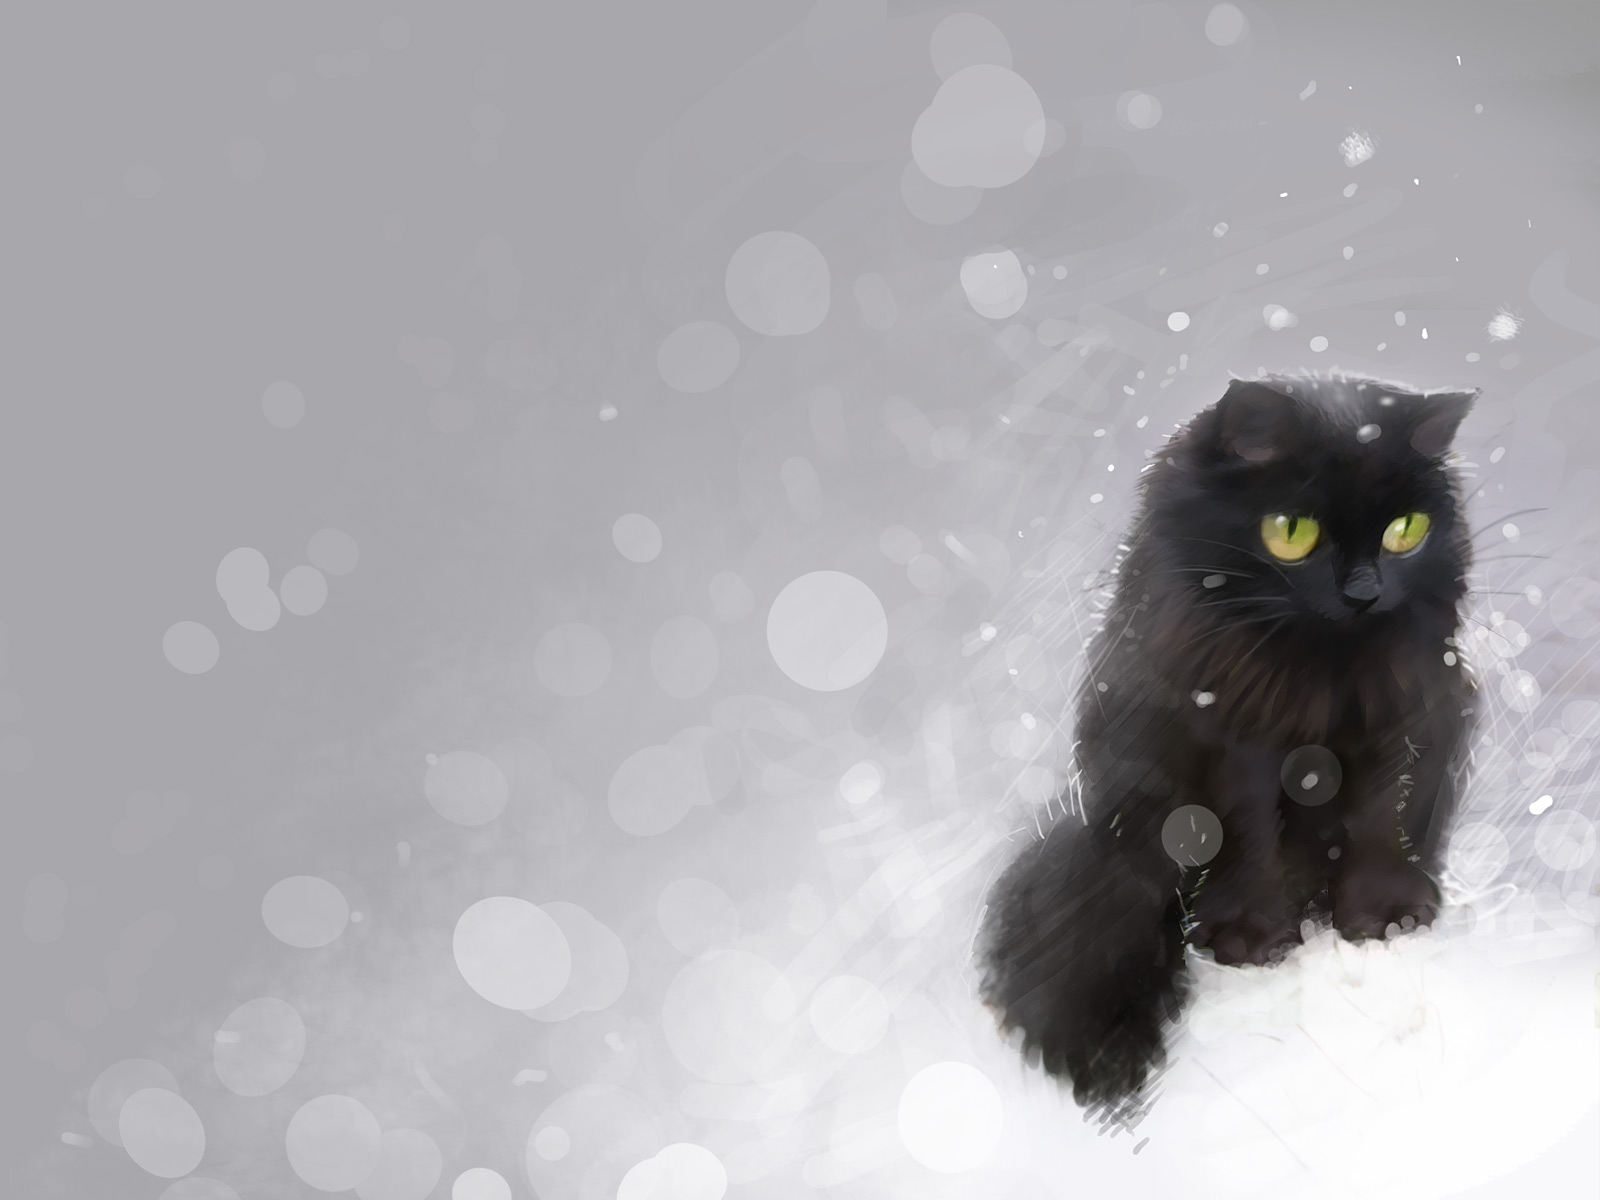 Artistic Black Cat in the Snow